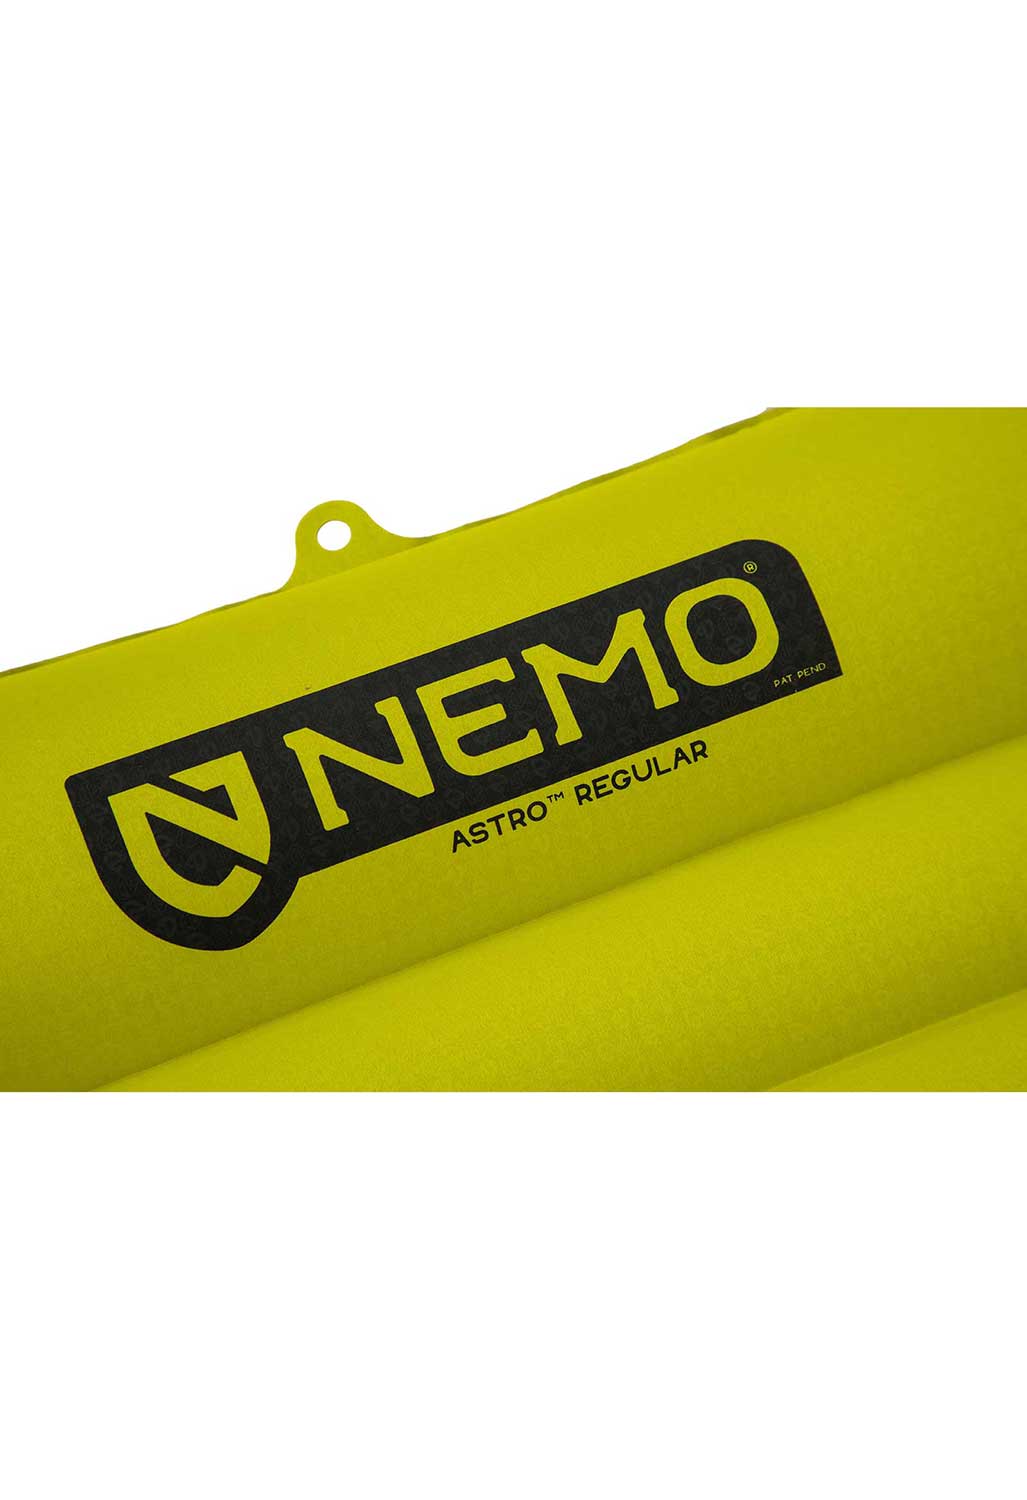 Nemo Astro Regular Camping Mat - Lumen